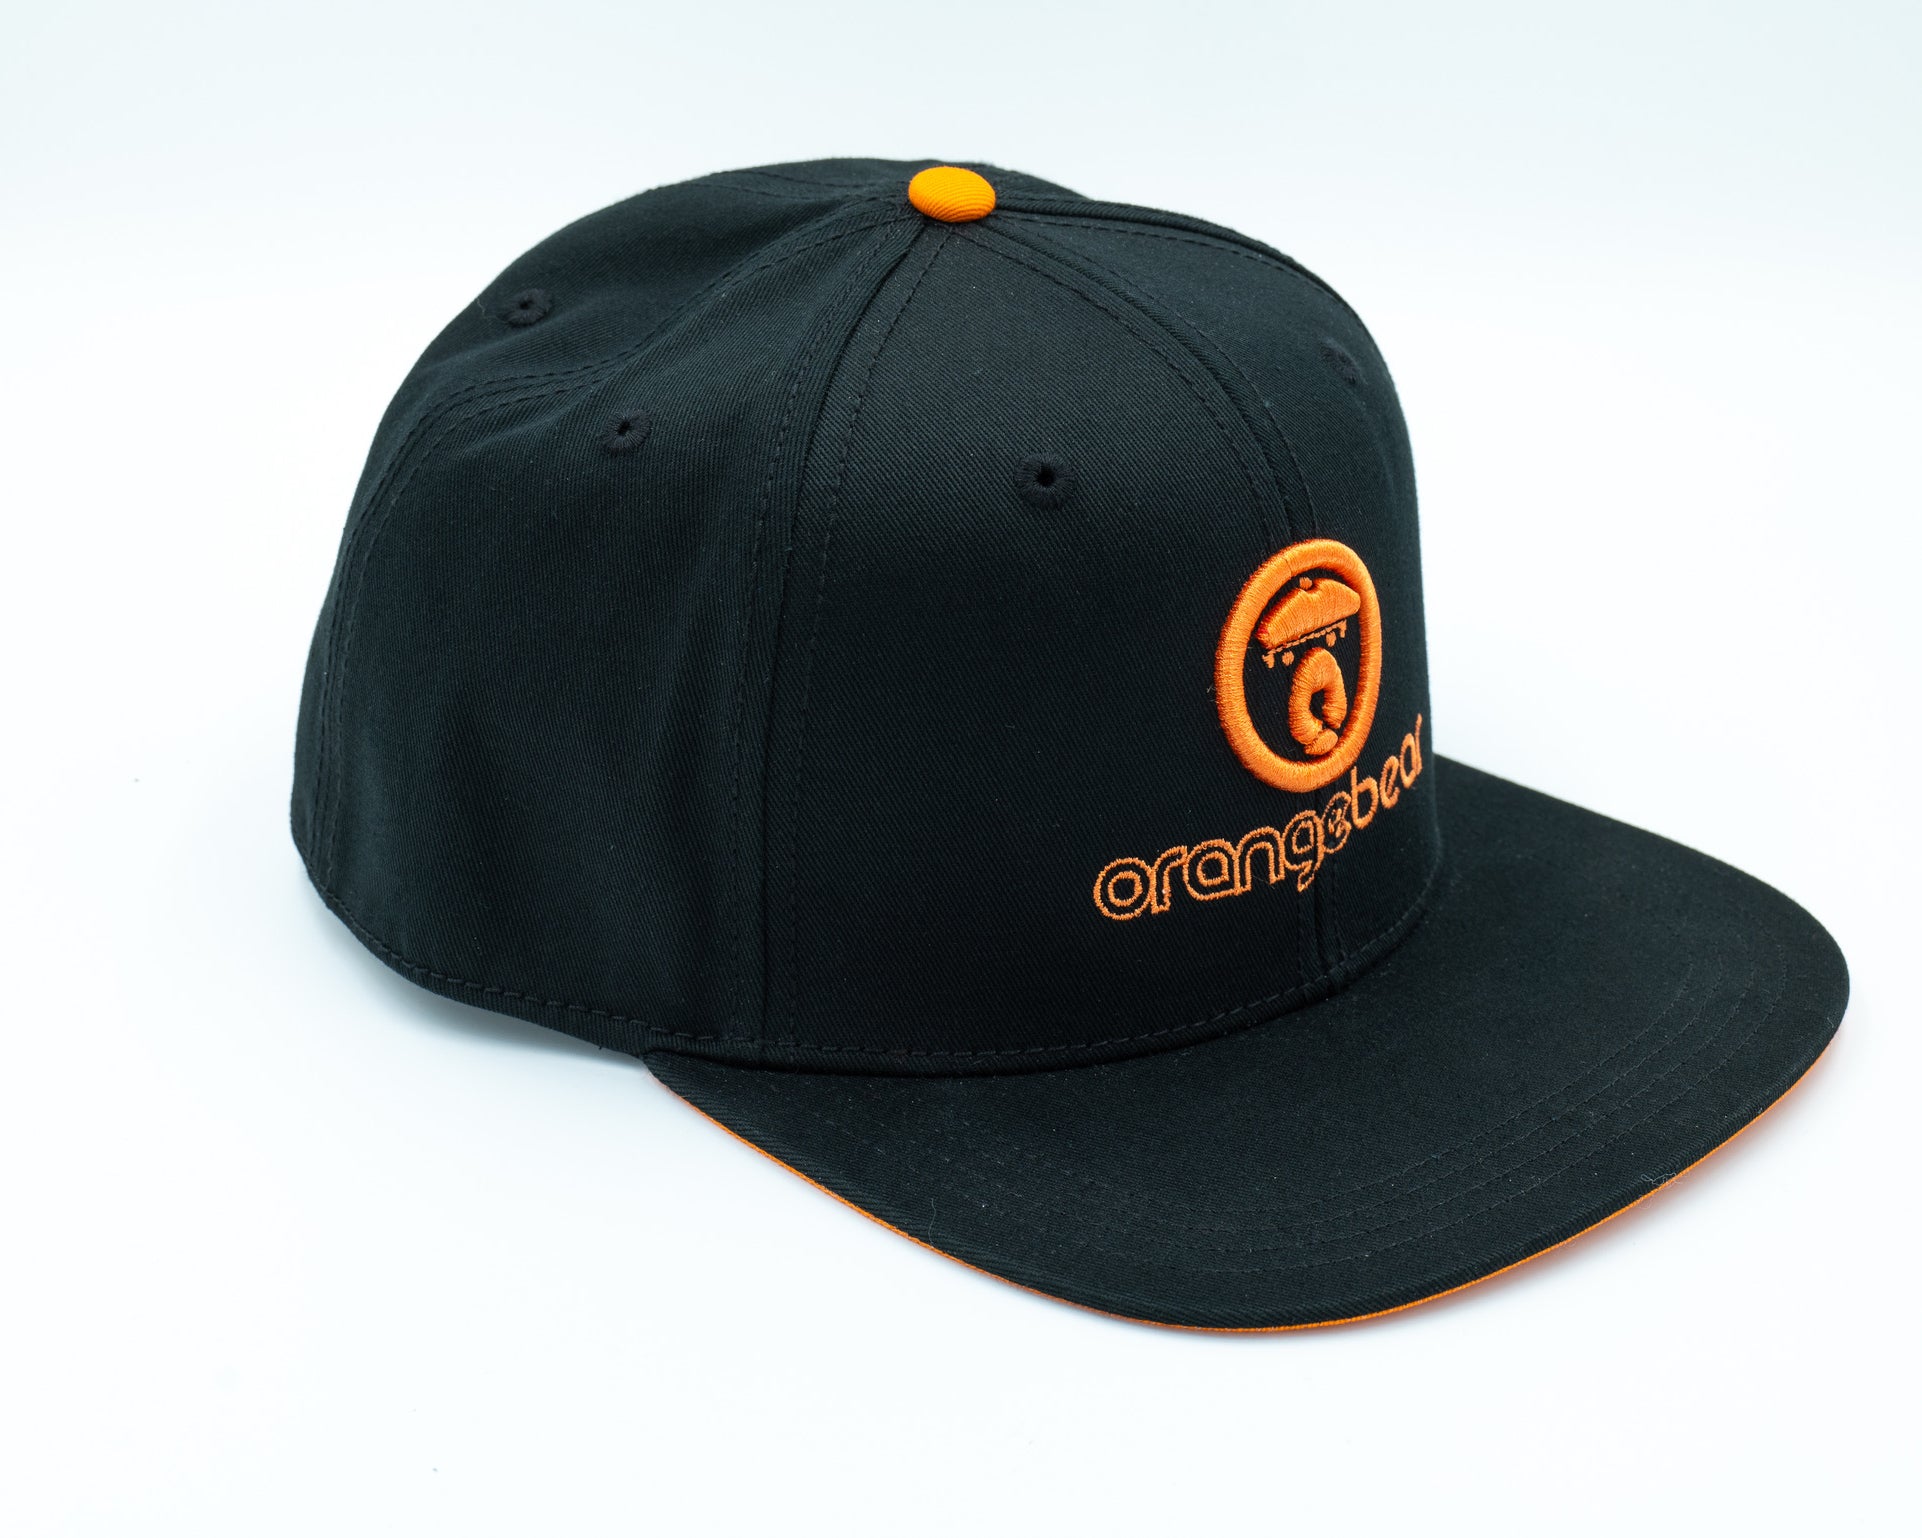 OranbearSTL Baseball Hat in Black sideways